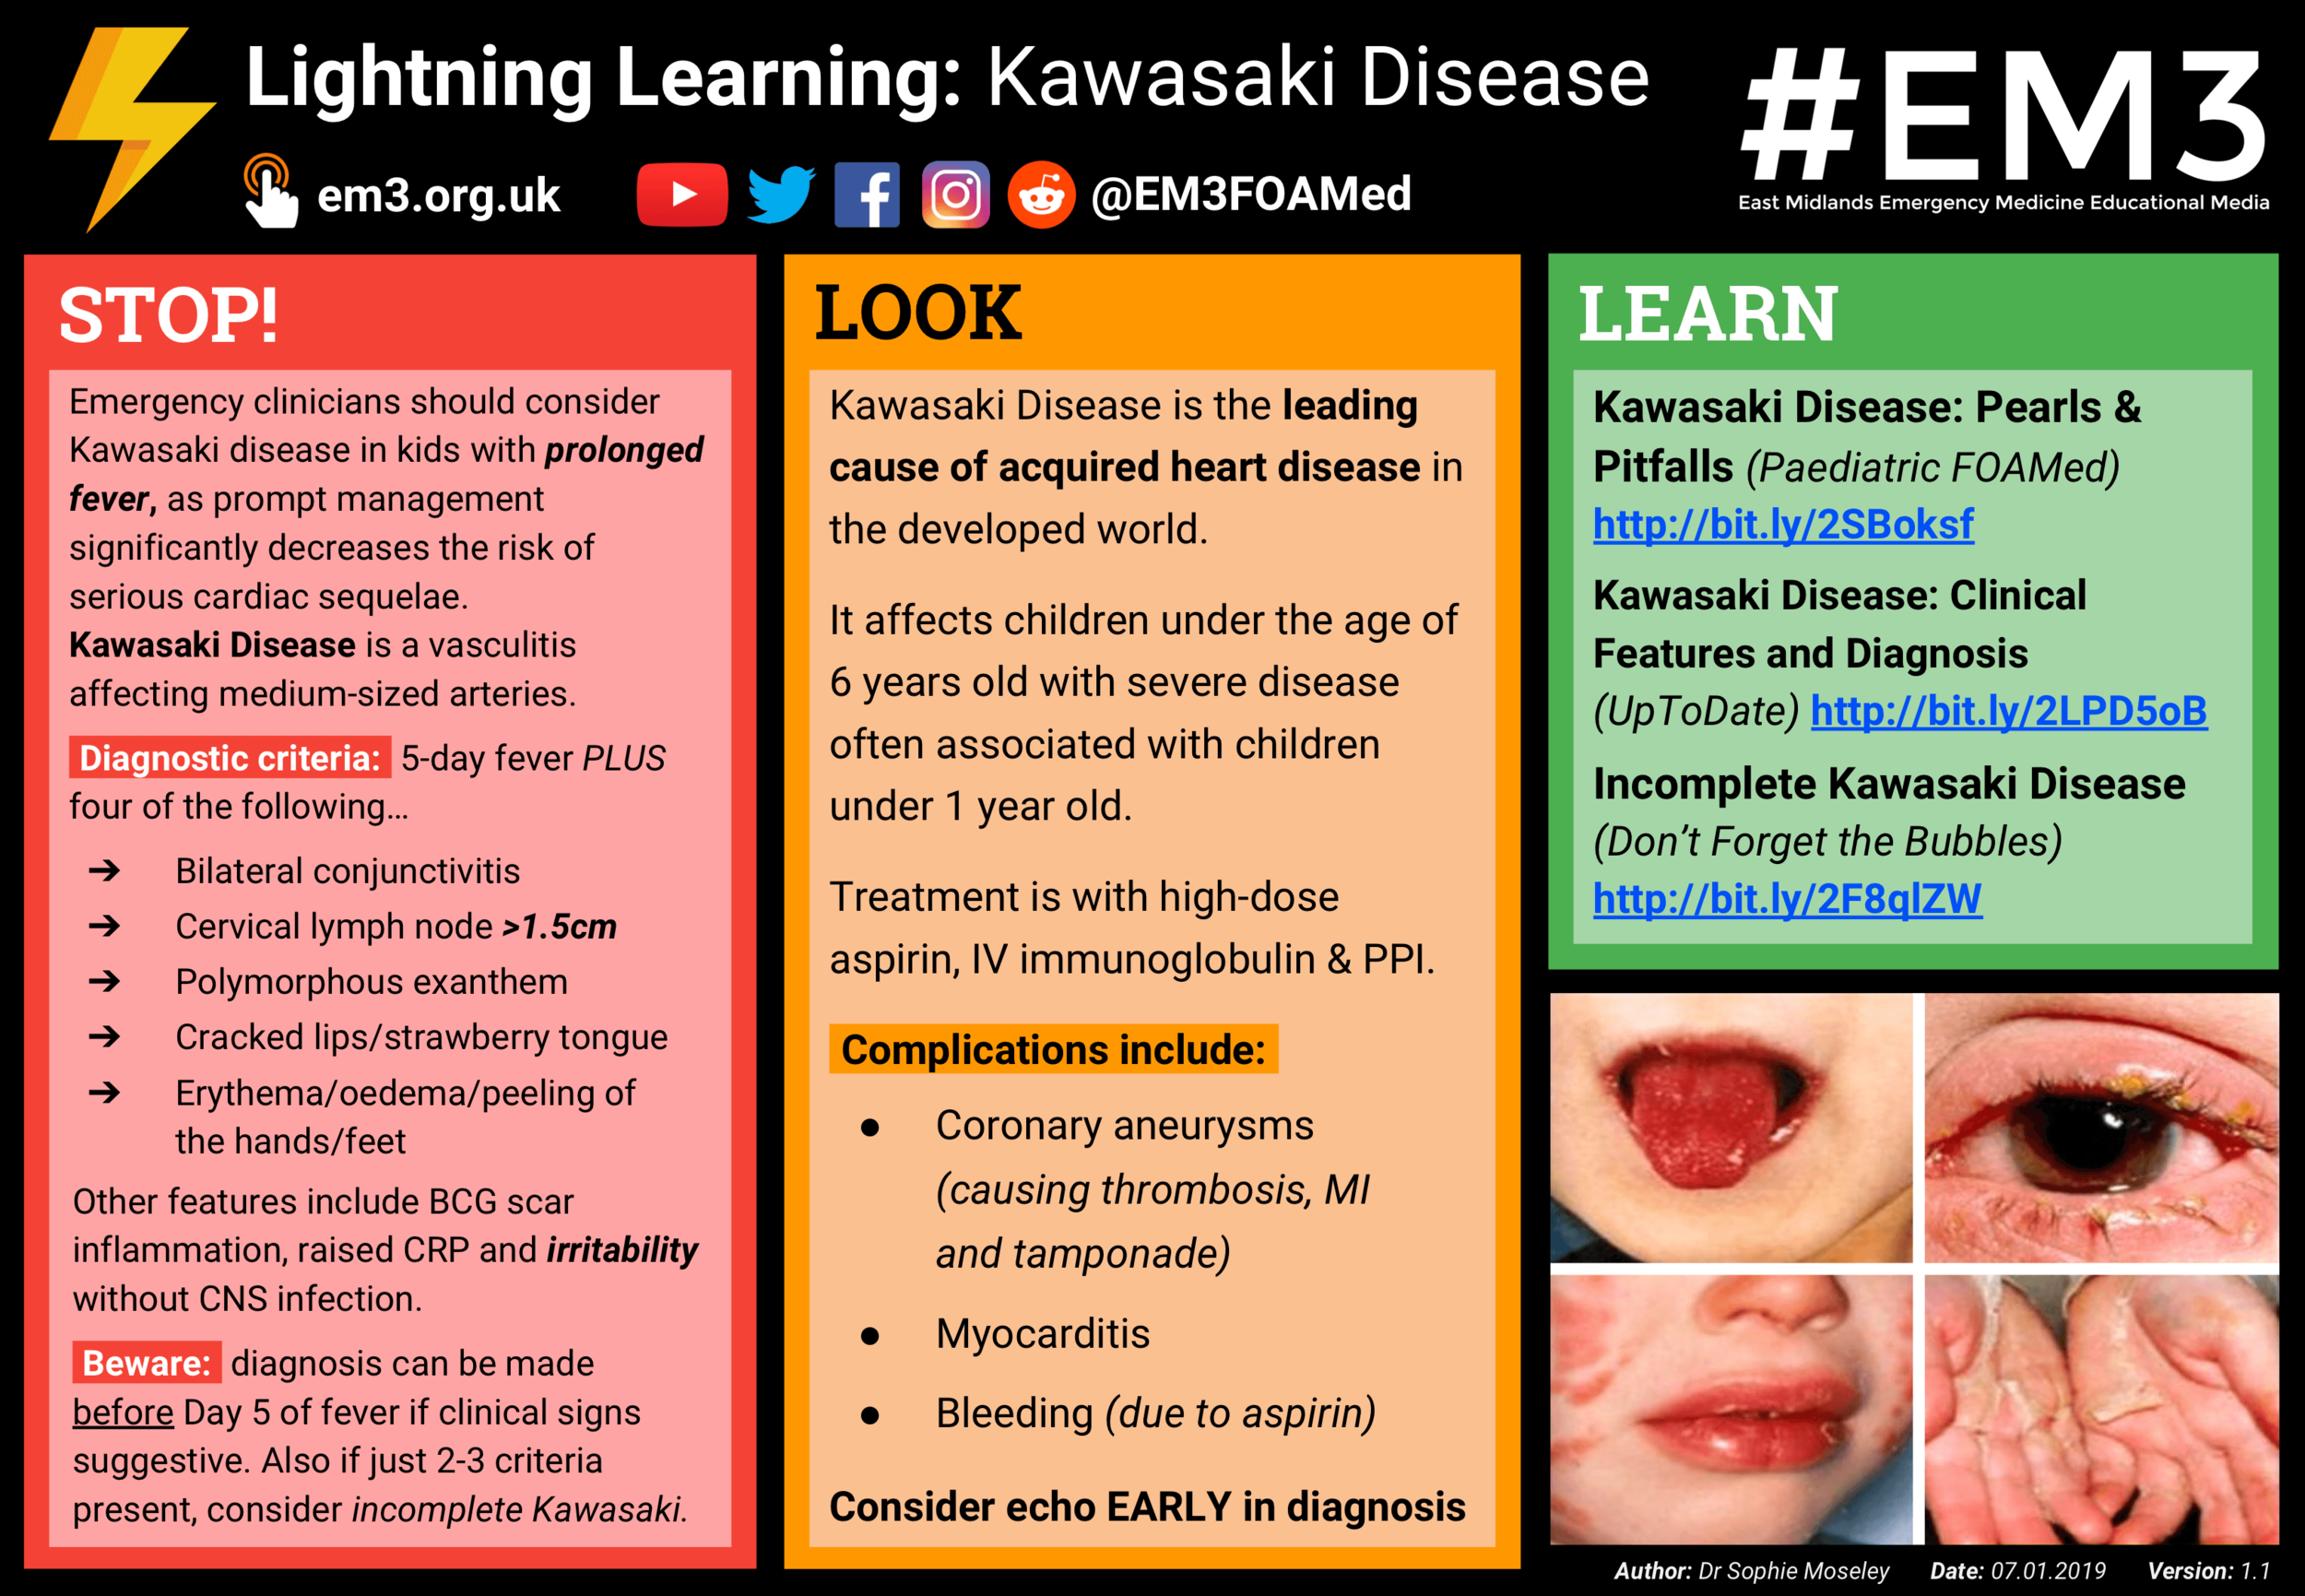 Lightning Learning: Kawasaki Disease #EM3: Midlands Emergency Medicine Educational Media